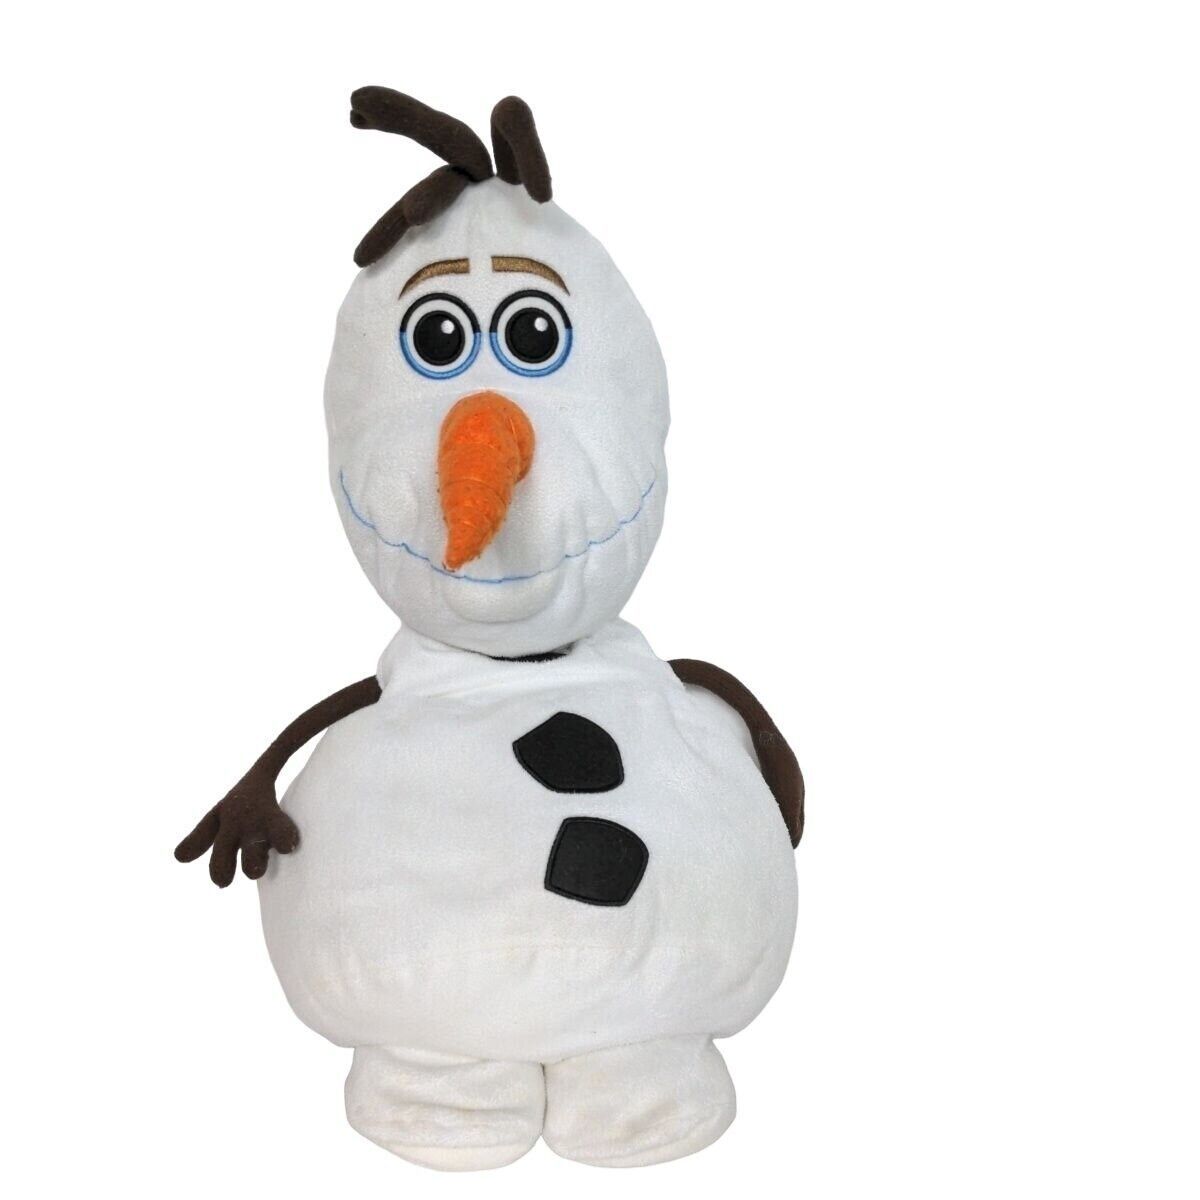 Disney Frozen Olaf Snowman Large Plush Stuffed Animal 2014 25" - $49.50